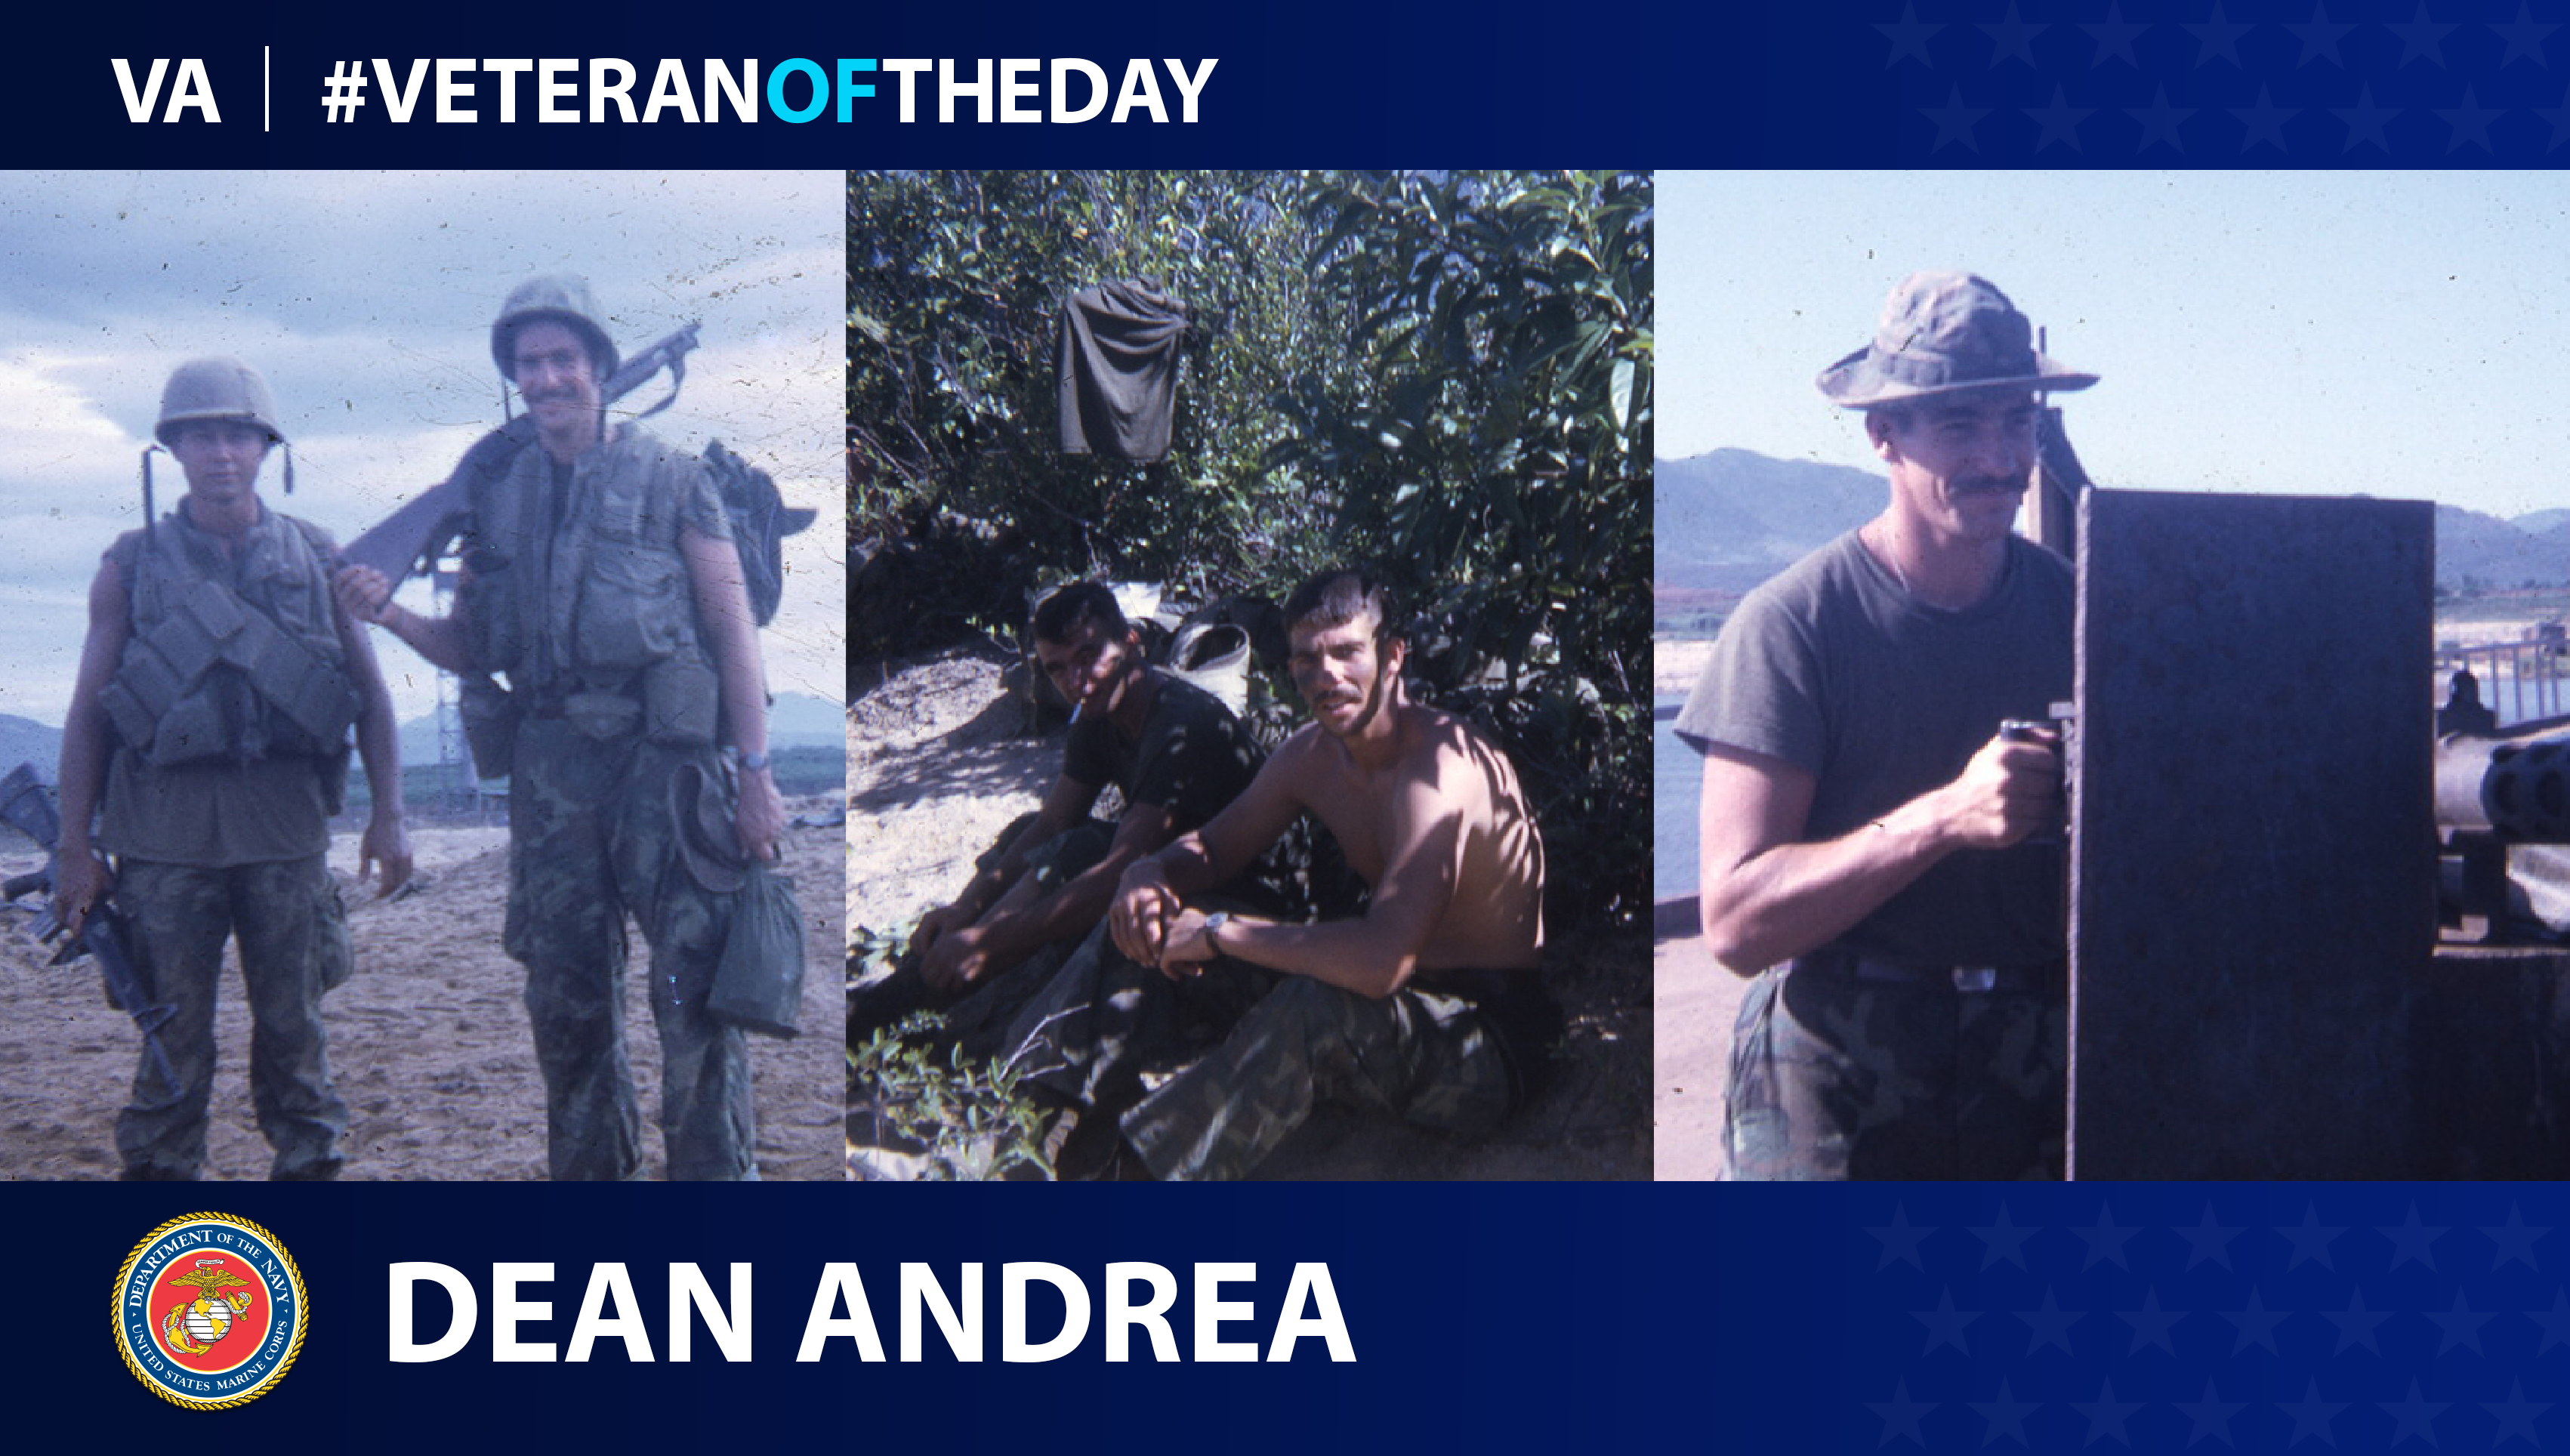 Marine Veteran Dean Andrea is today's Veteran of the day.